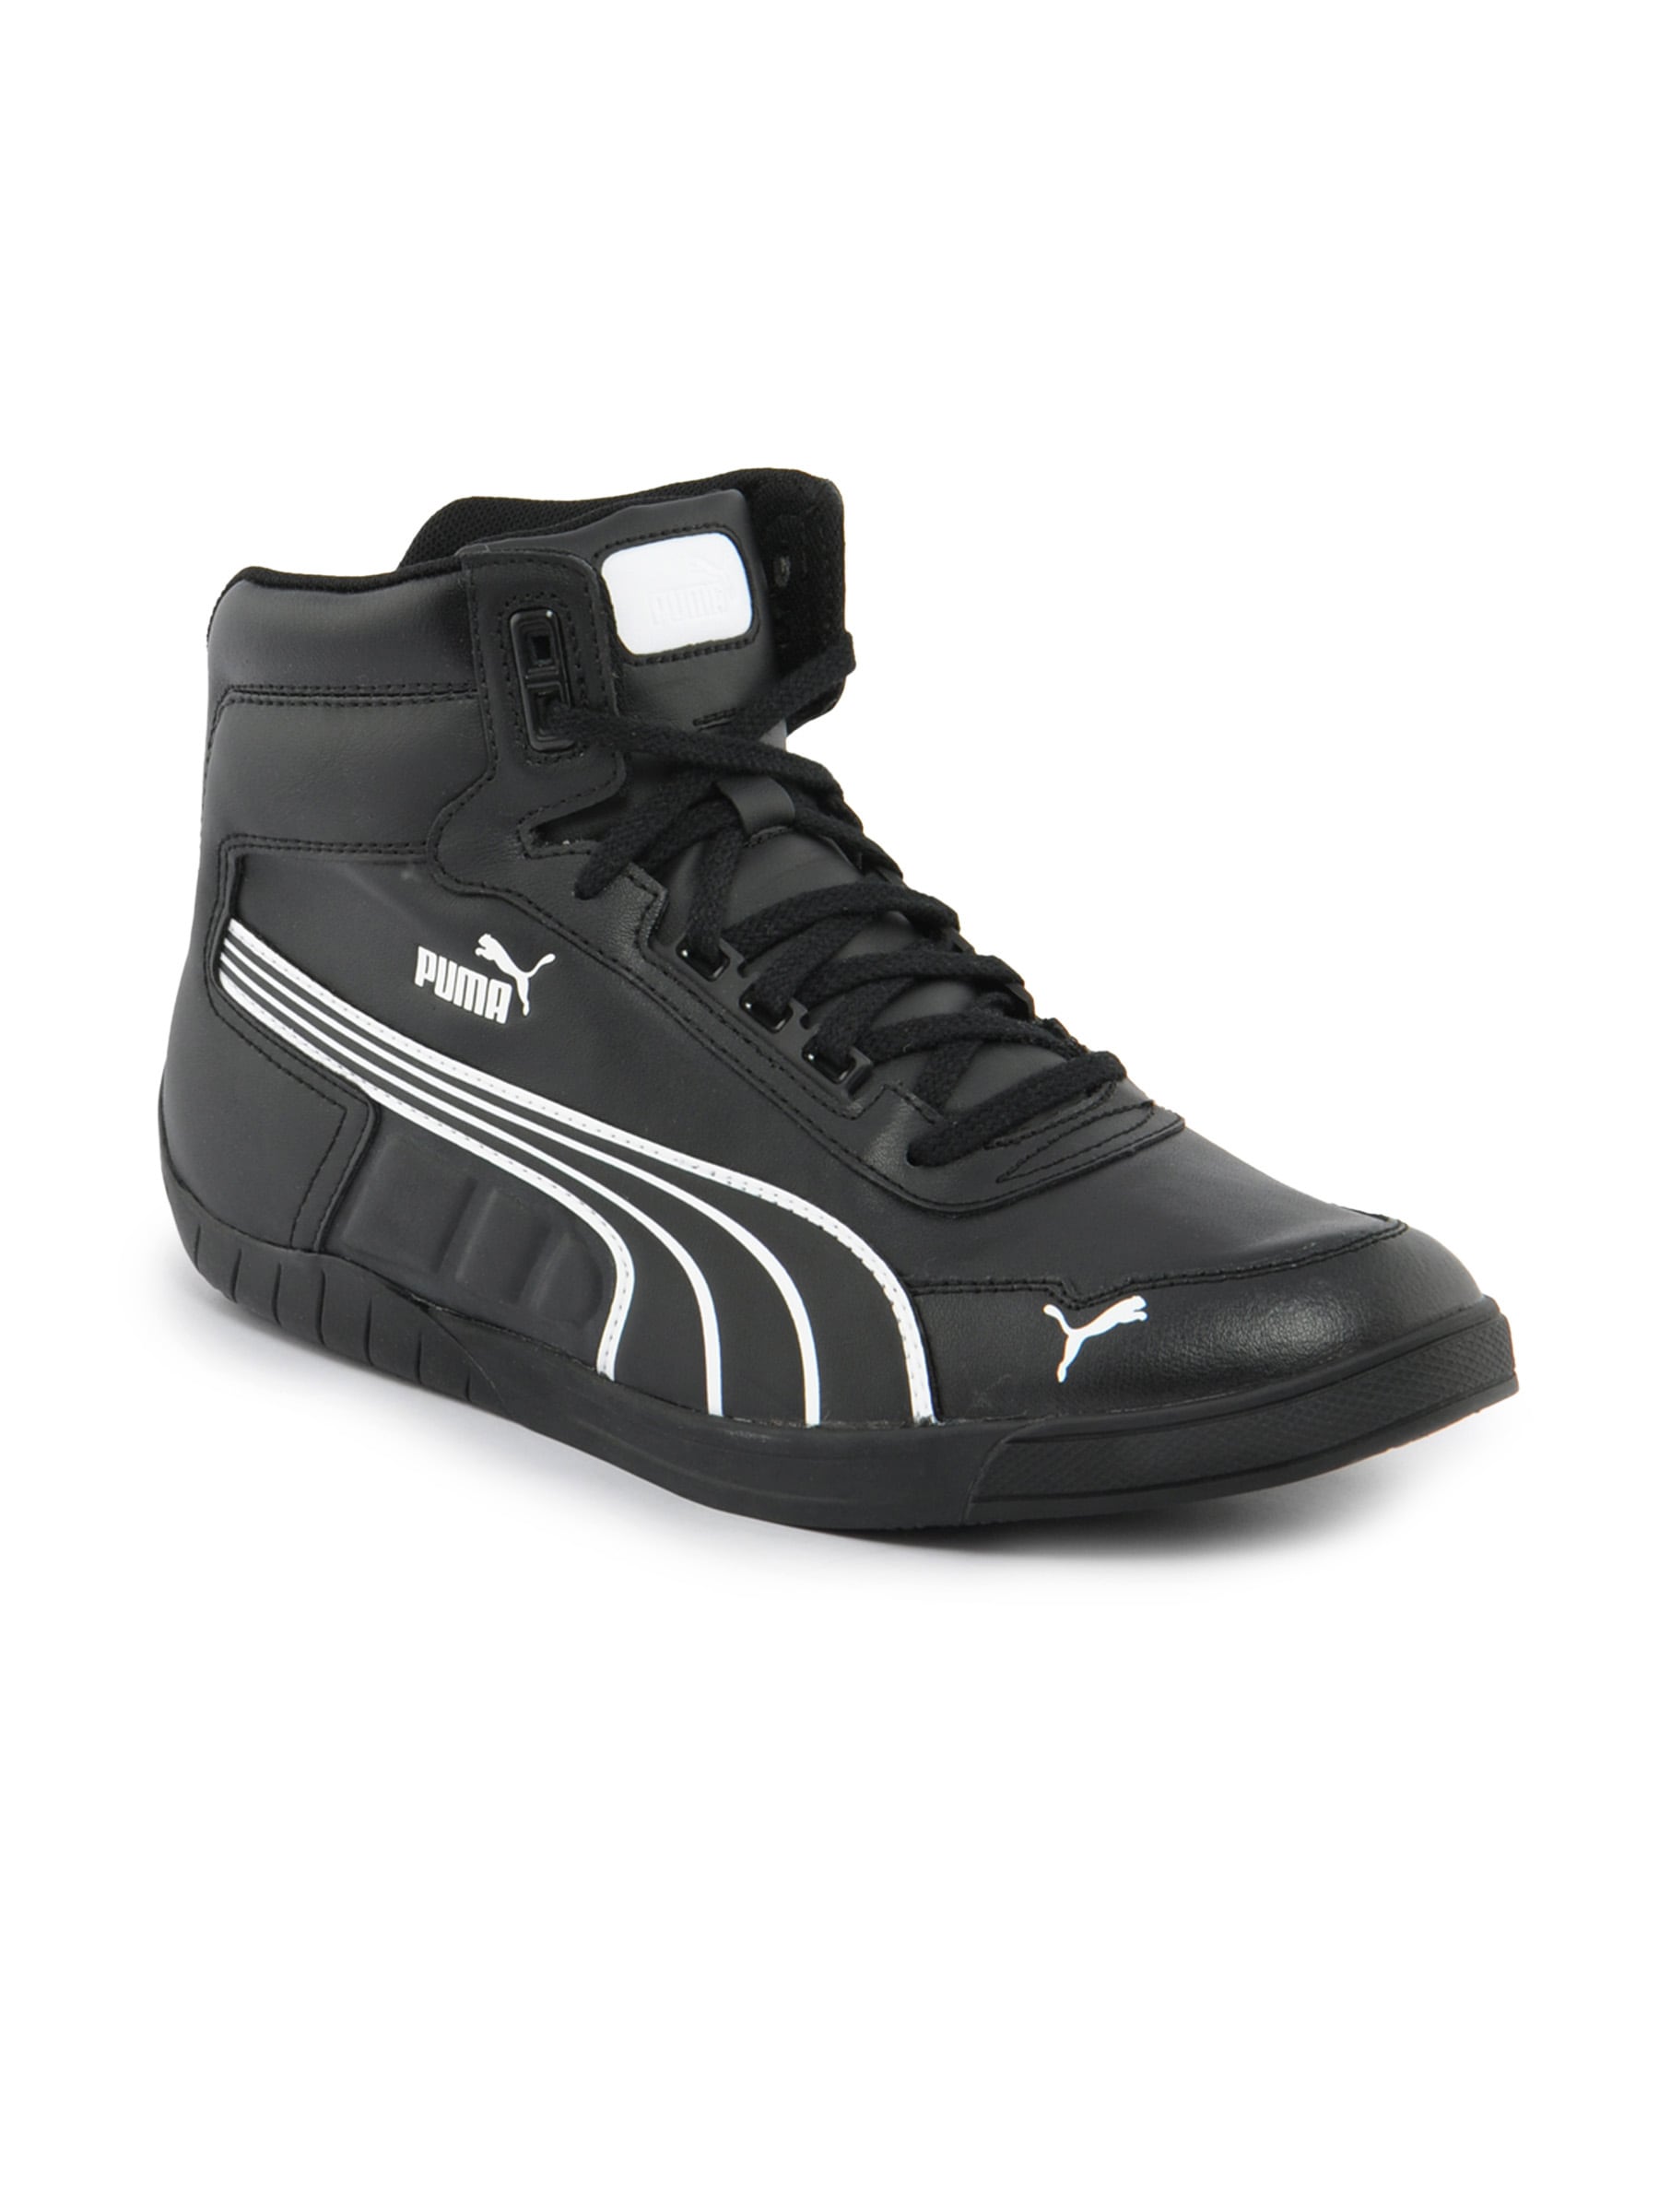 Puma Men 3.0 Mid Black Sports Shoe